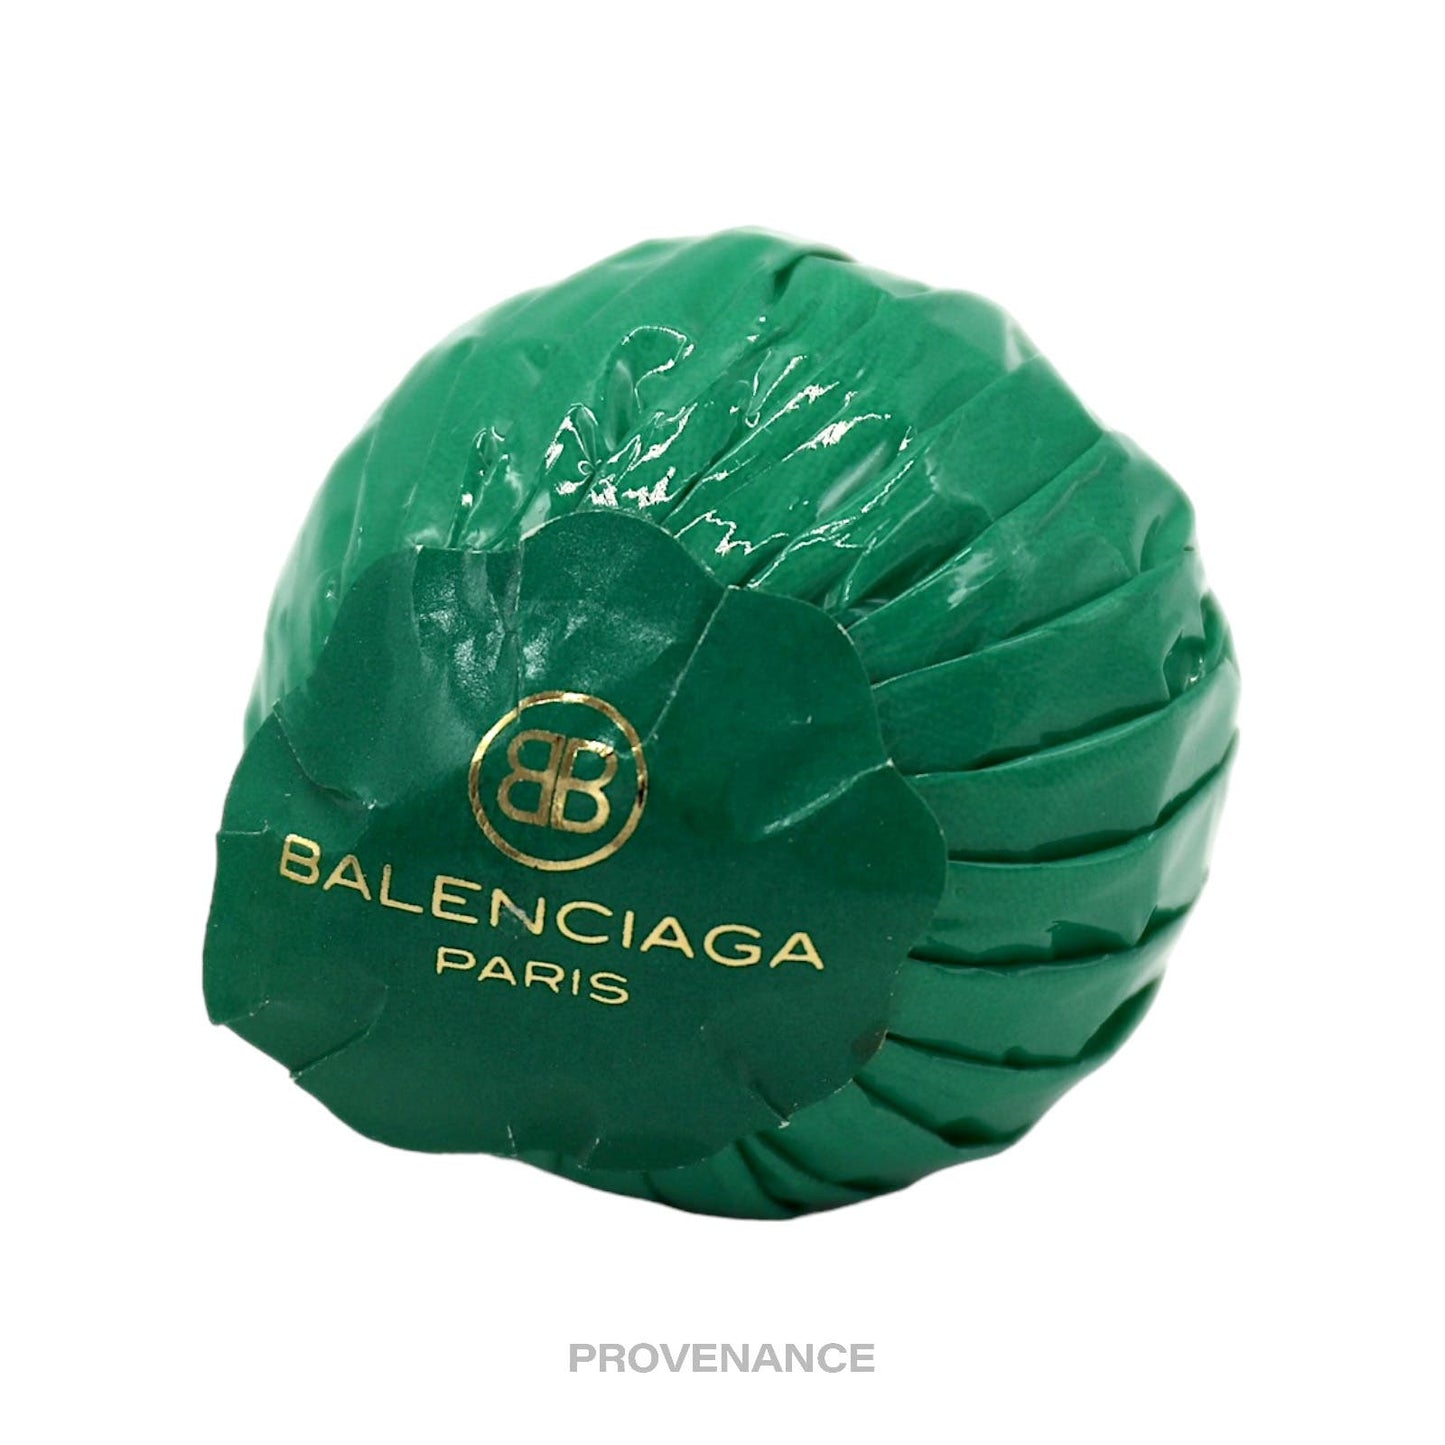 🔴 Balenciaga x Dunlop Golf Balls (Set of 3) - Green